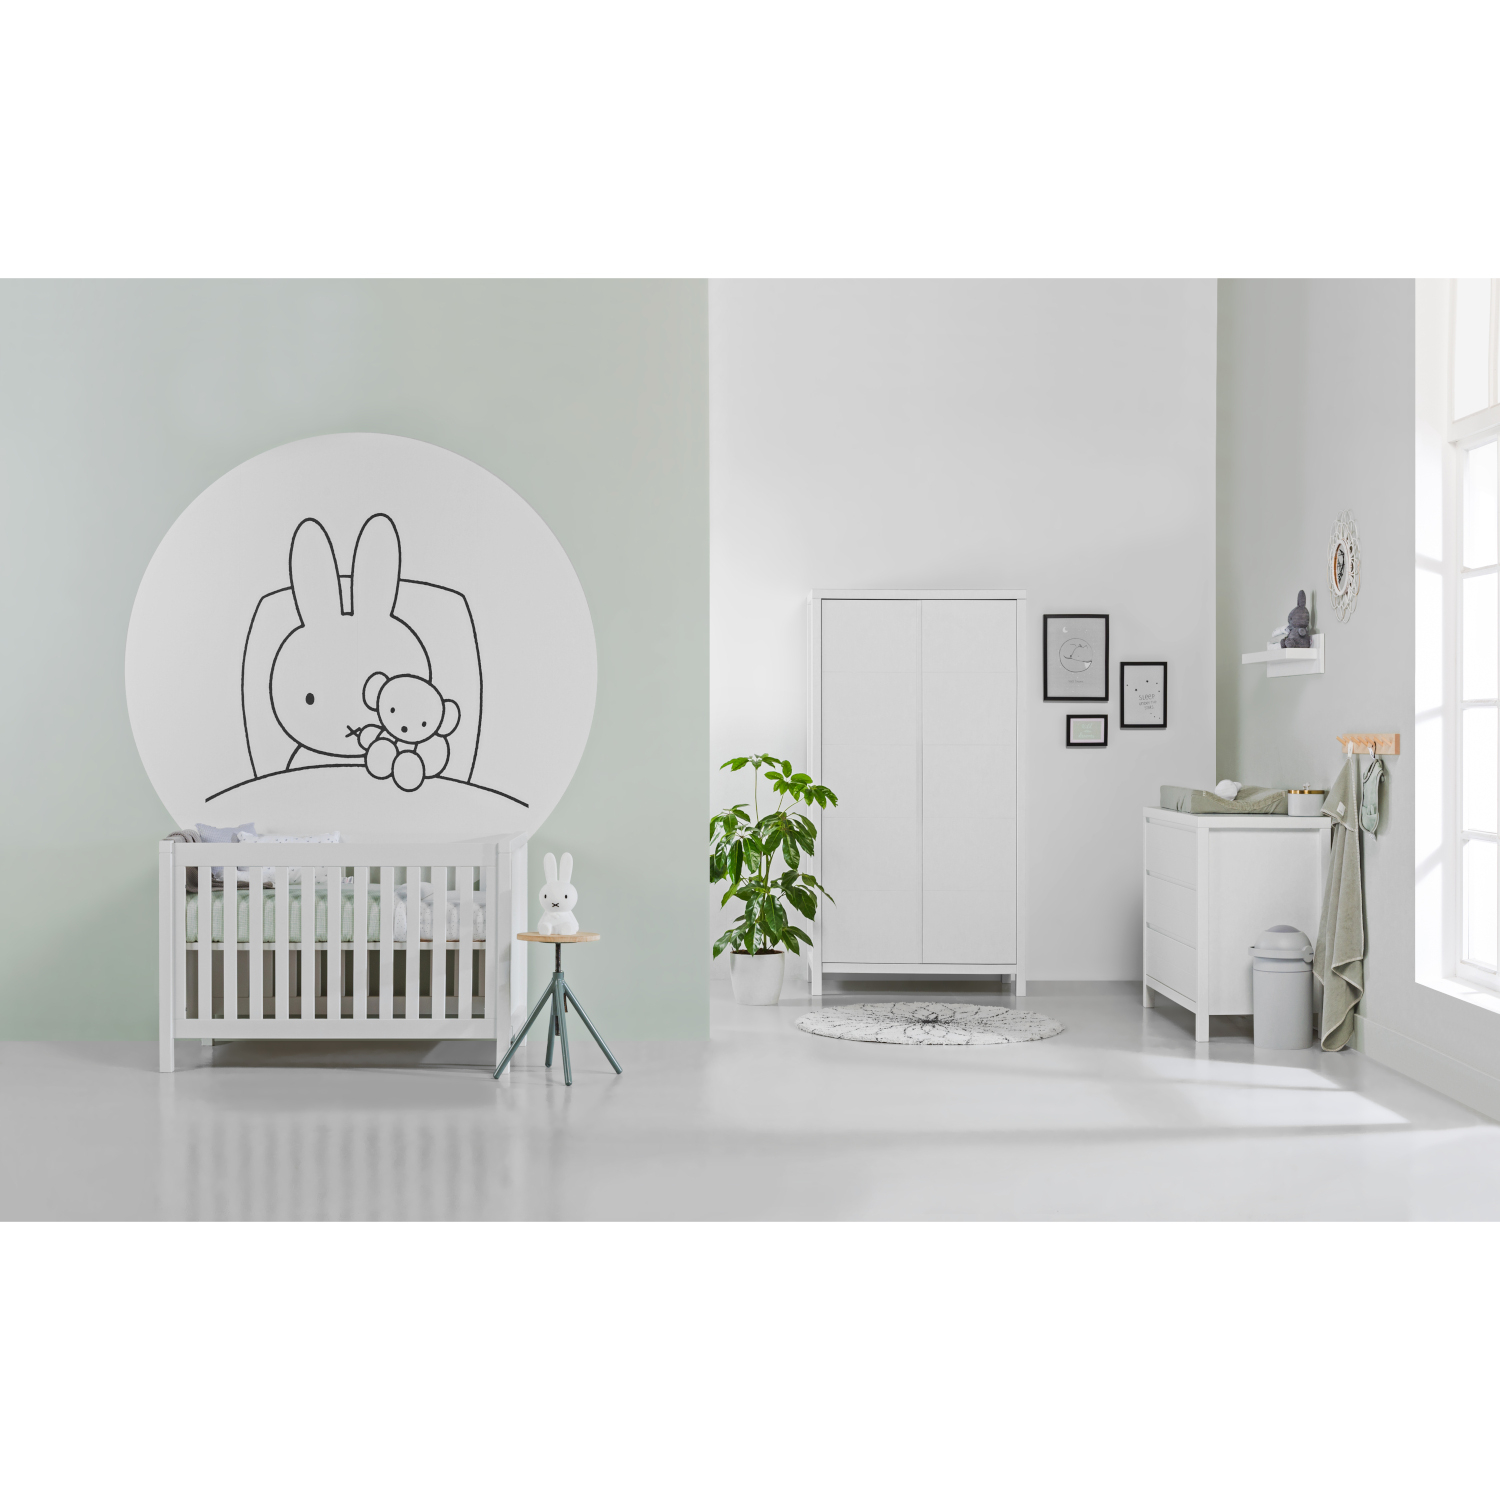 Europe Baby Atlantic Babykamer Wit | Bed 70 x 140 cm + Commode + Kast